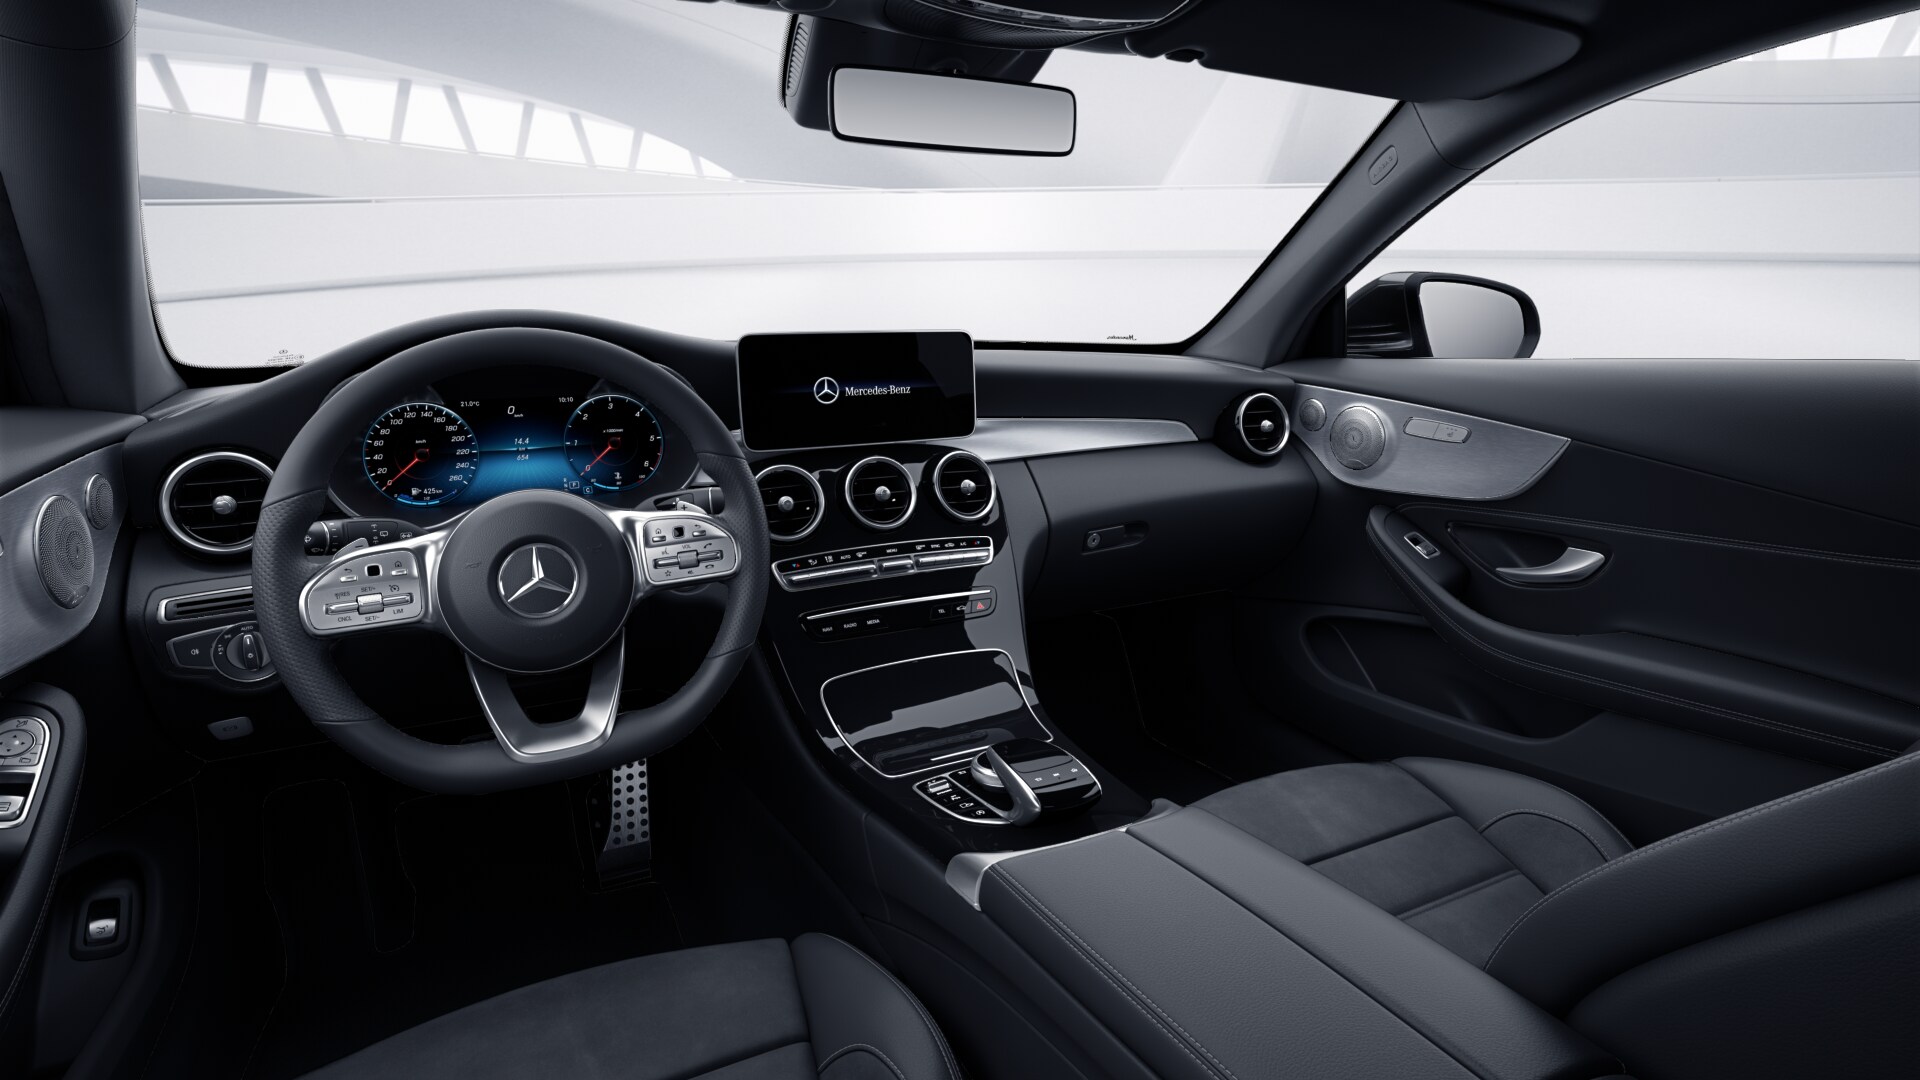 Mercedes C 220 d kupé | nové auto skladem | sleva 18%| nákup online